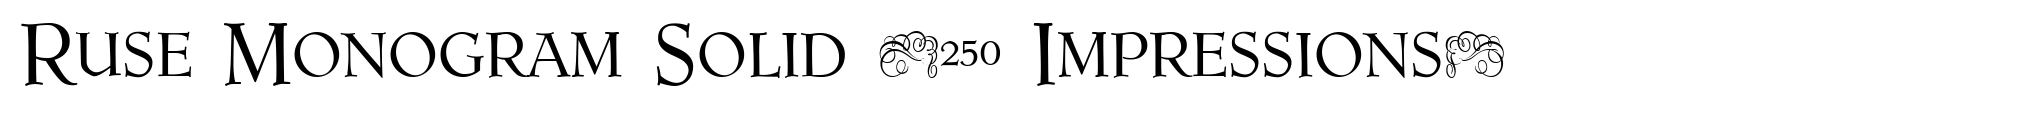 Ruse Monogram Solid (250 Impressions) image